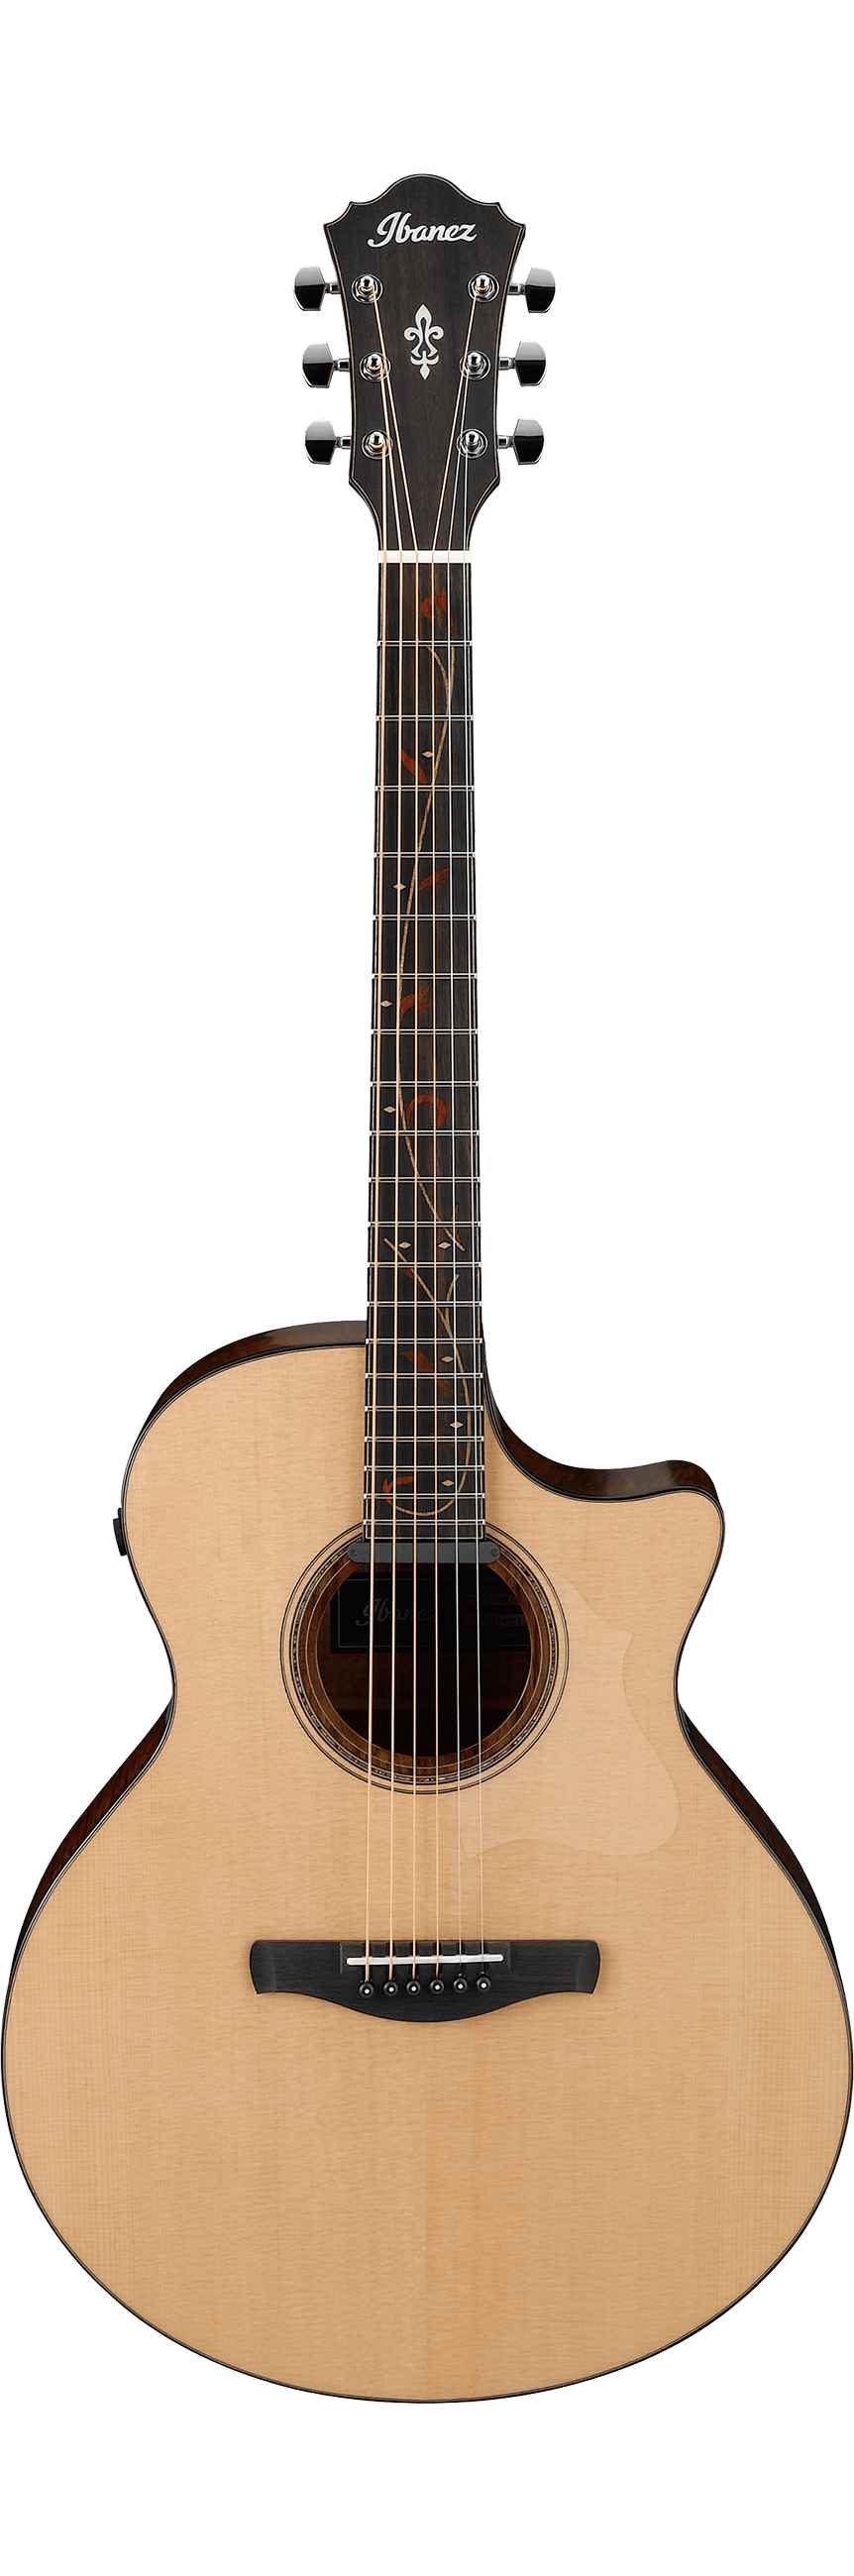 Ibanez AE325LGS (Natural Low Gloss) Acoustic Guitar